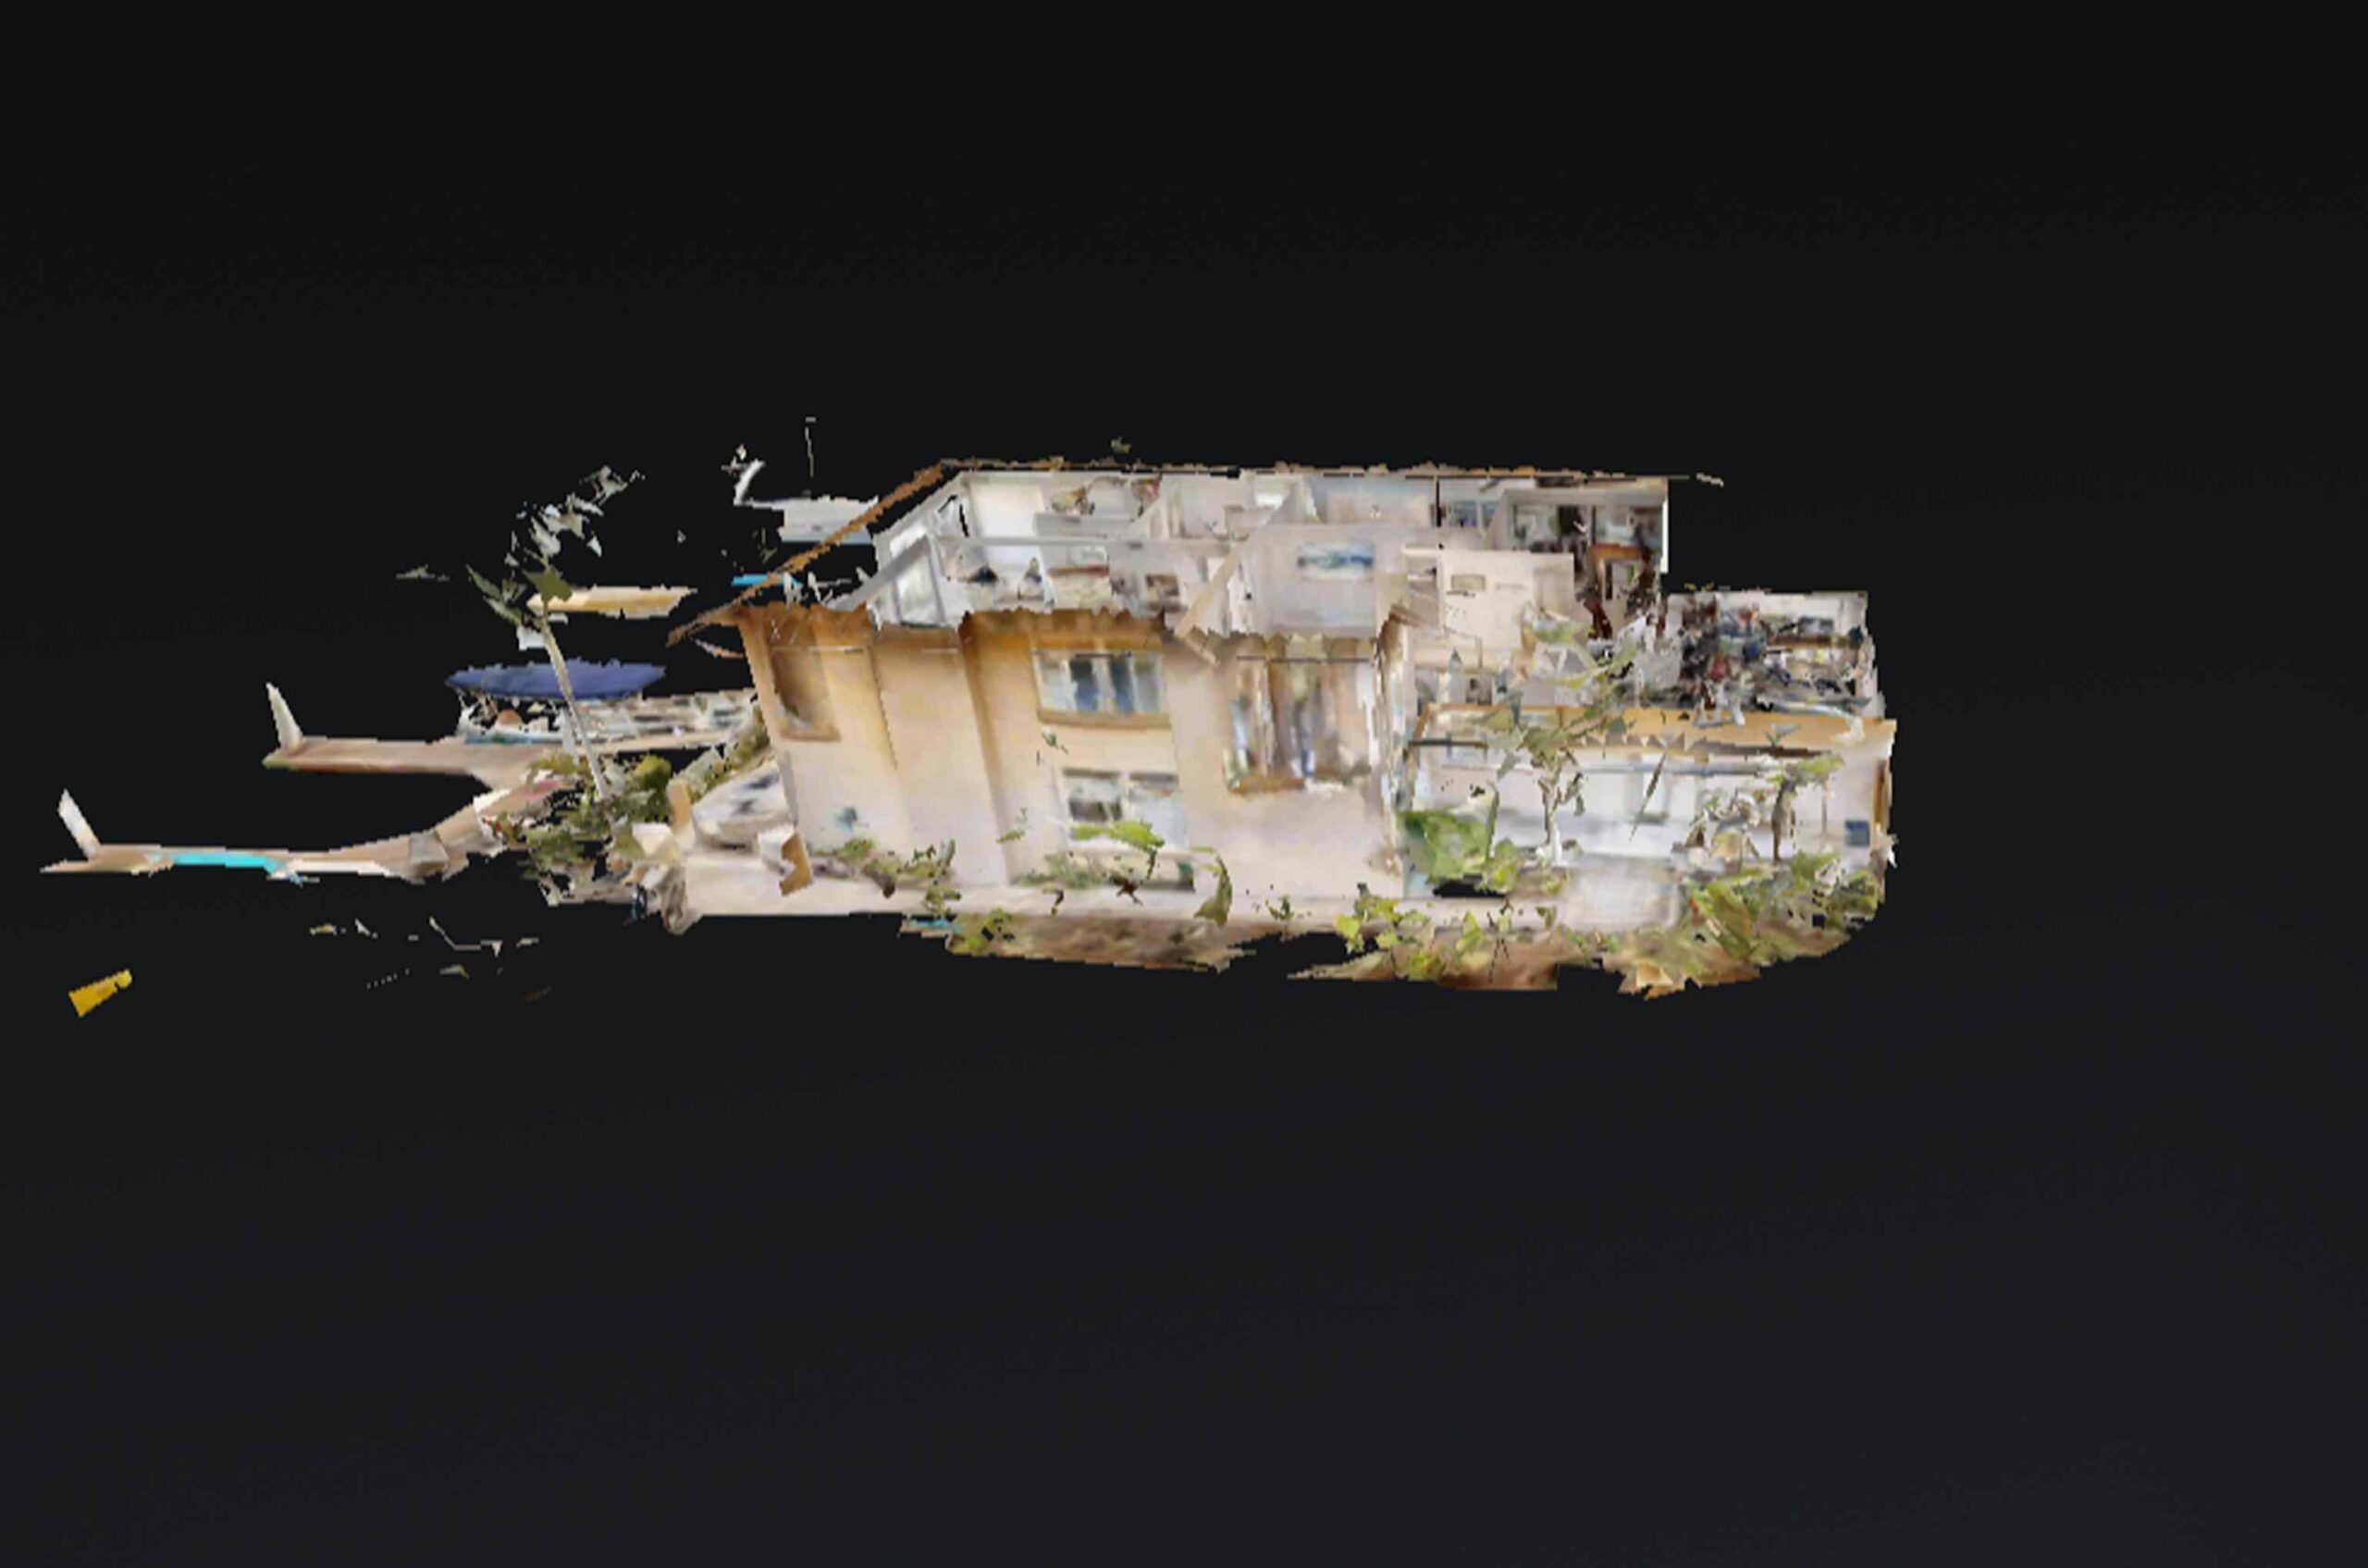 Matterport 3D Tours For Commercial Real Estate